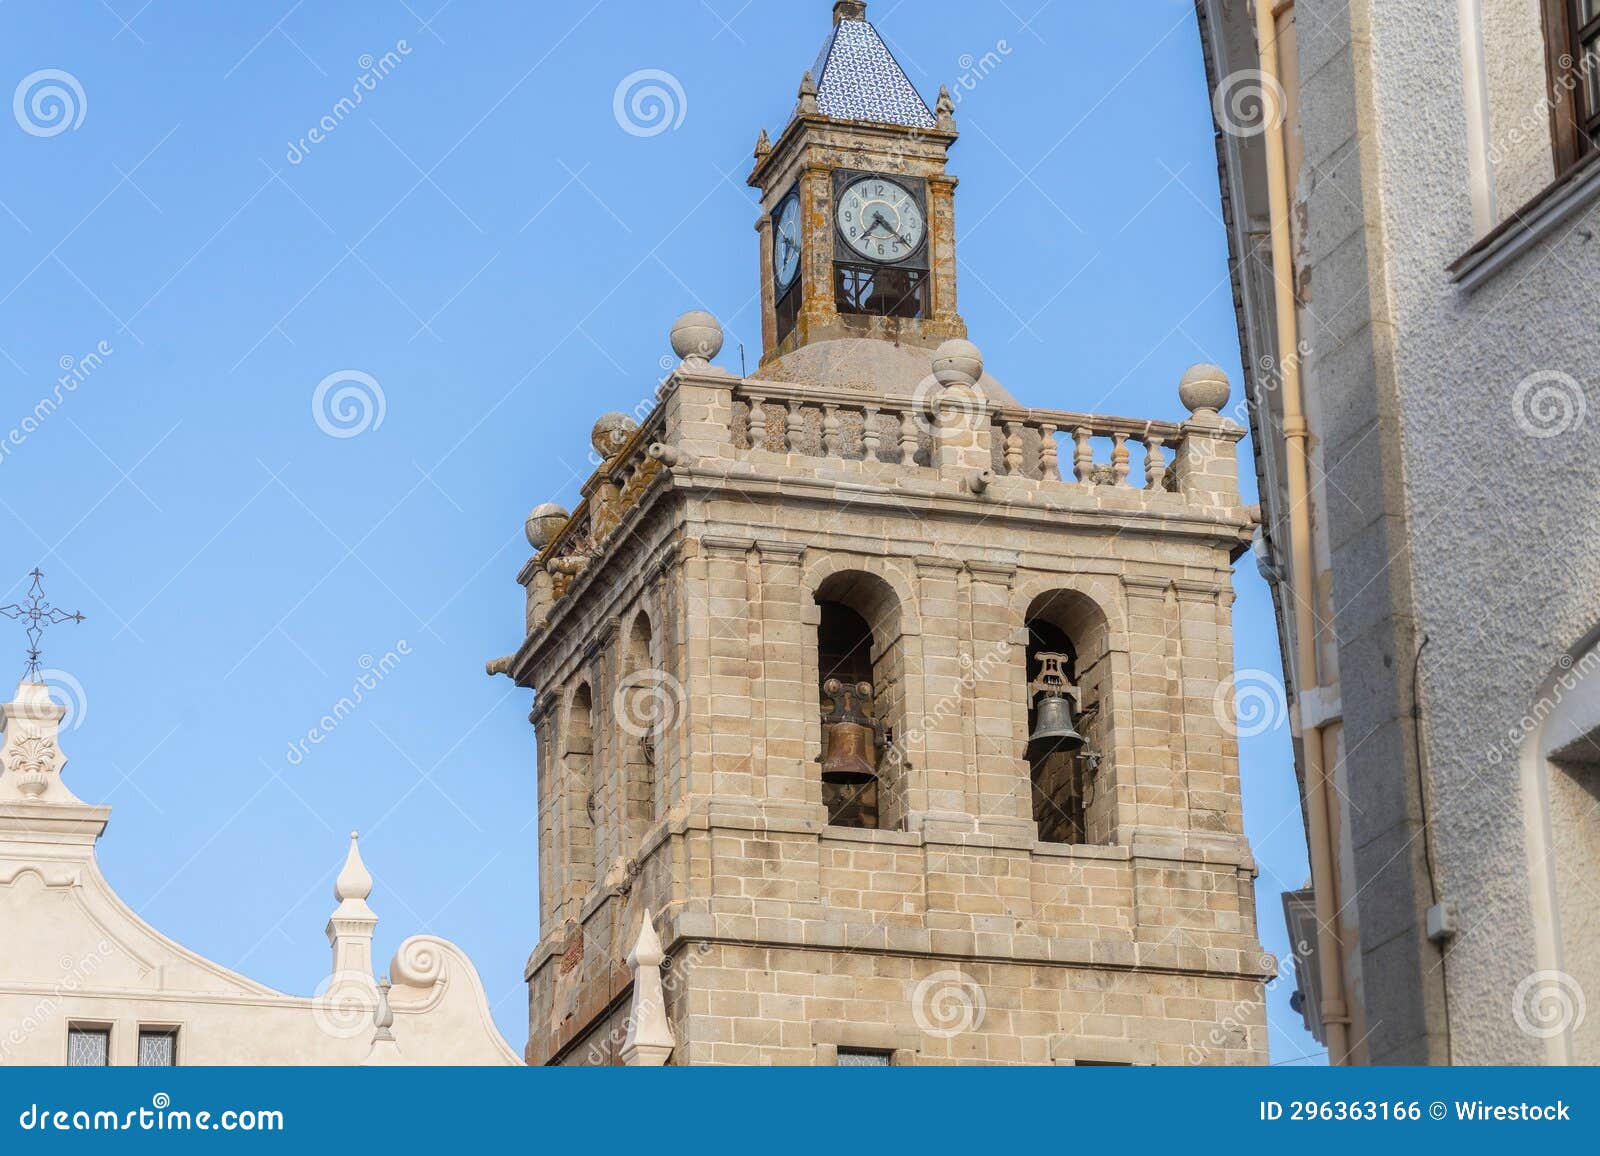 beautiful religious tower in the town of villanueva de la serena, badajoz, spain.